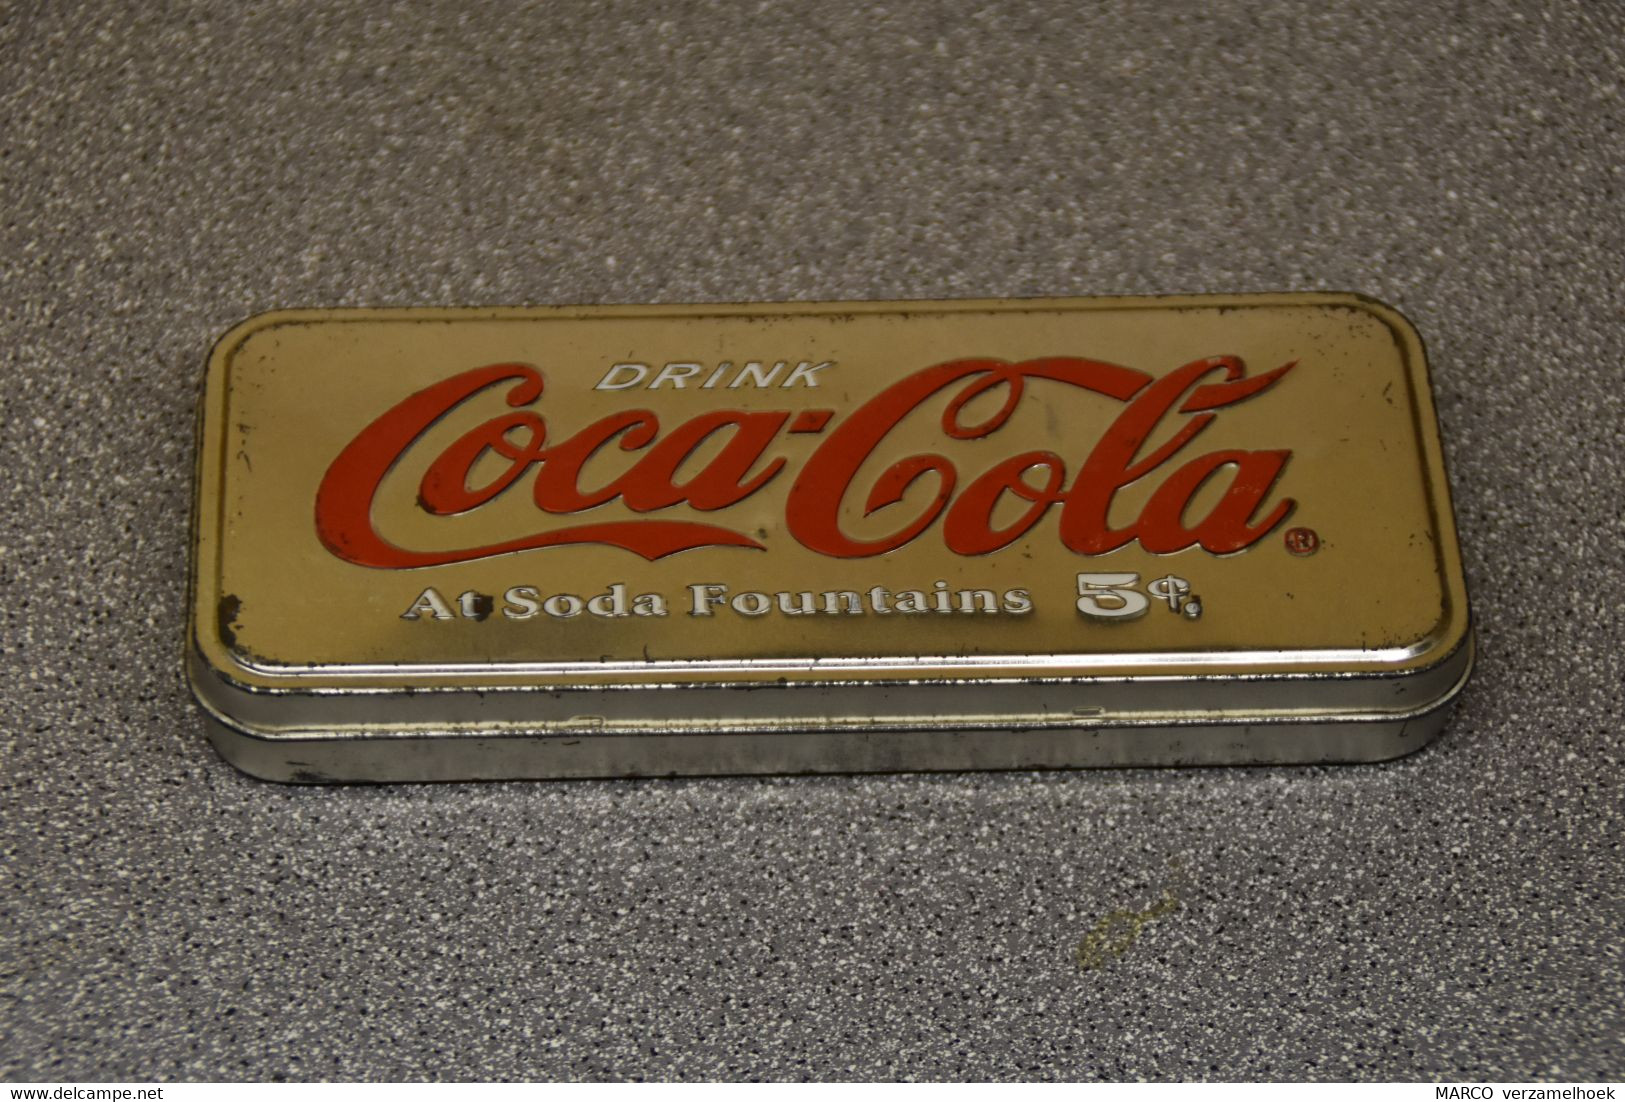 Coca-cola Company Pennenblik - Cans